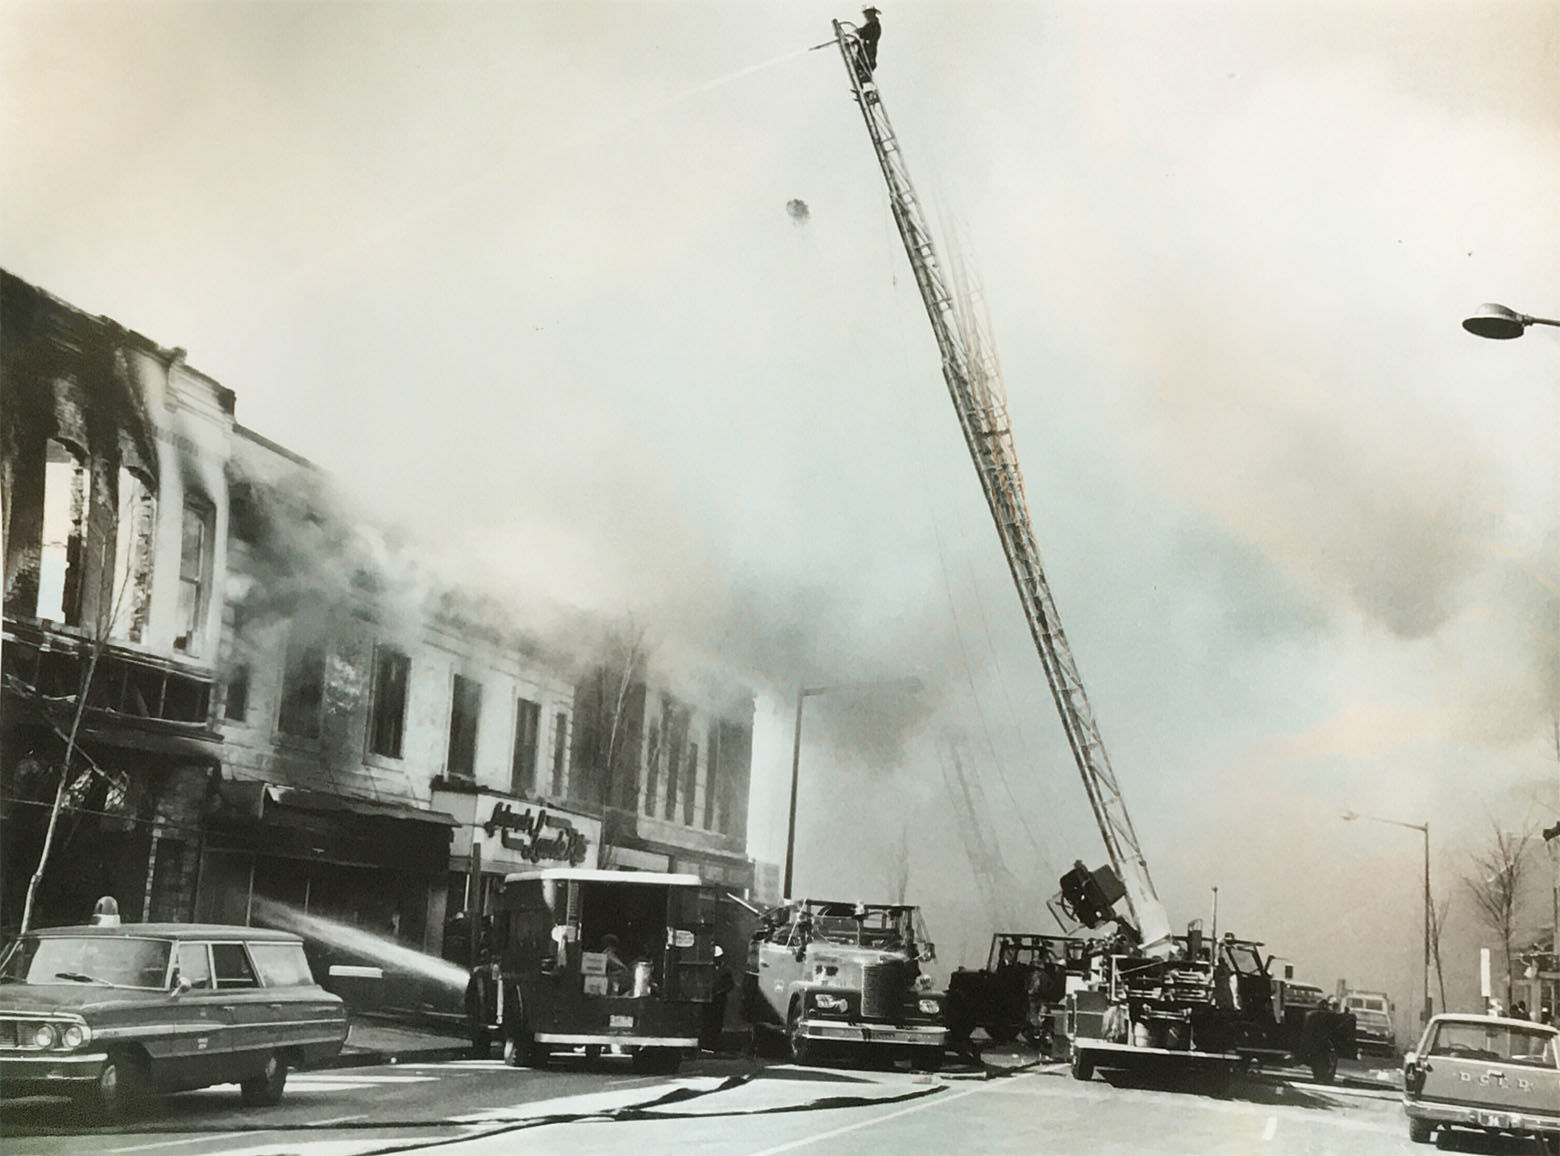 Perched high atop a ladder truck, a D.C. firefighter battles a blaze. (Courtesy D.C. Fire and EMS Museum)